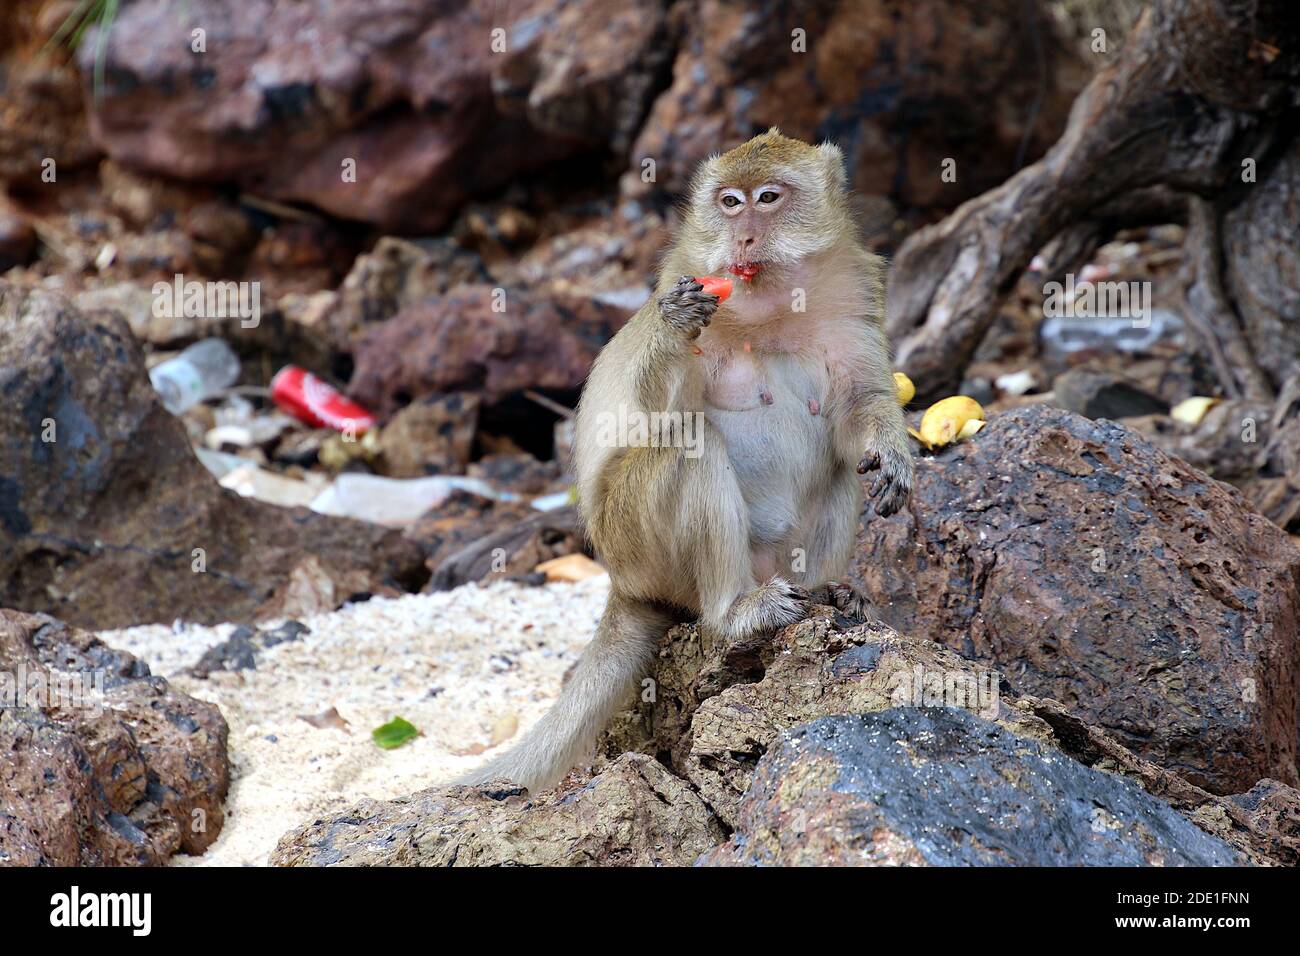 Monkeys eat food next to the waste pile. Stock Photo